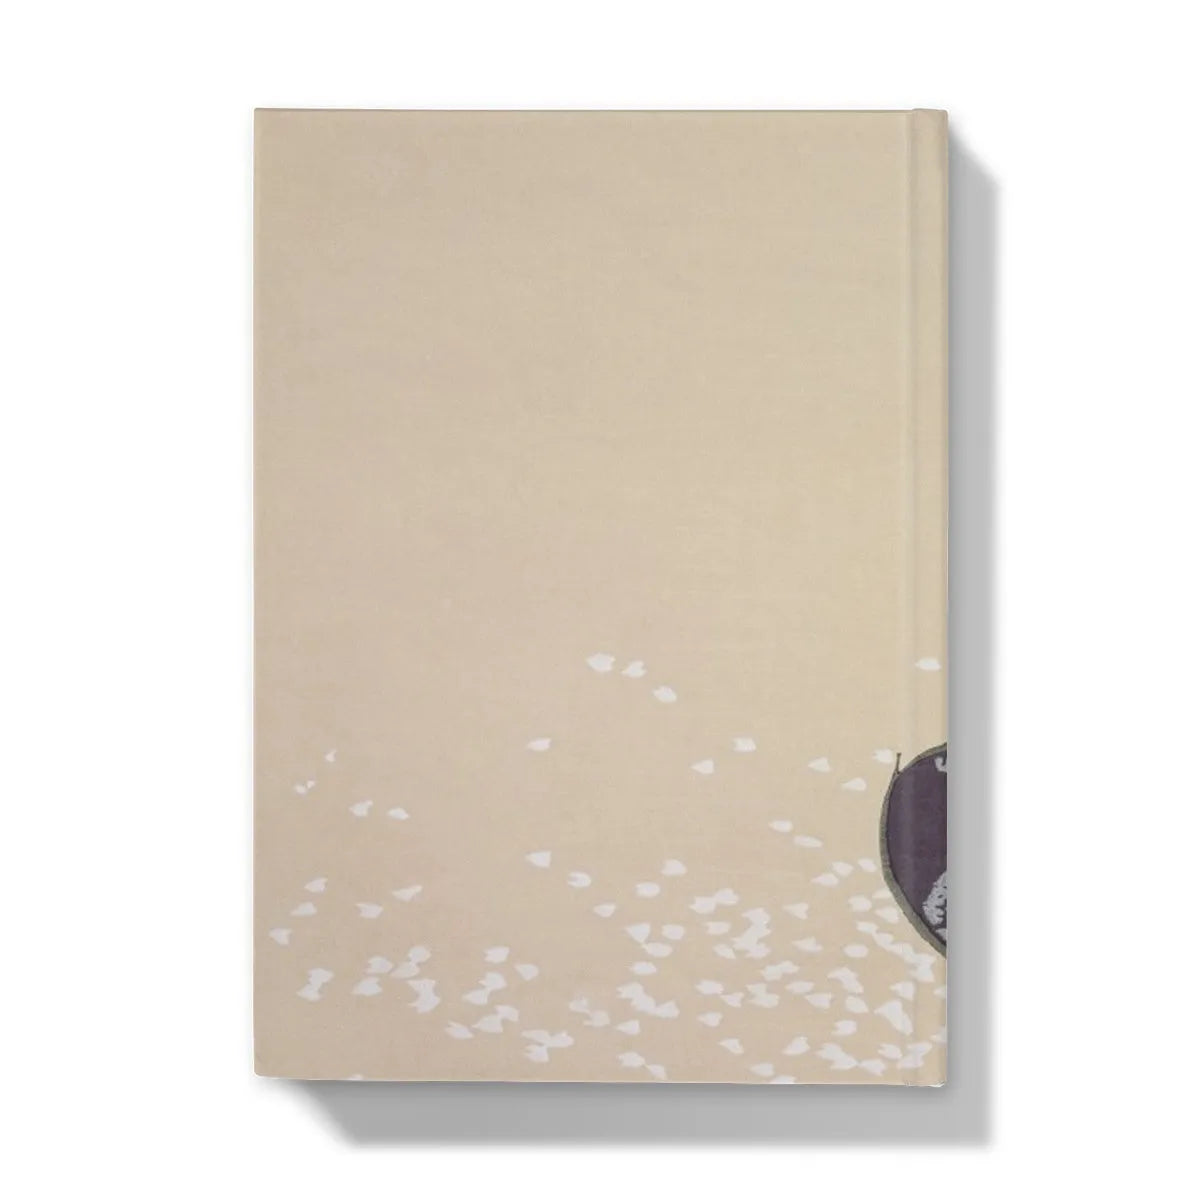 Flute Player By Kamisaka Sekka Hardback Journal - Notebooks & Notepads - Aesthetic Art